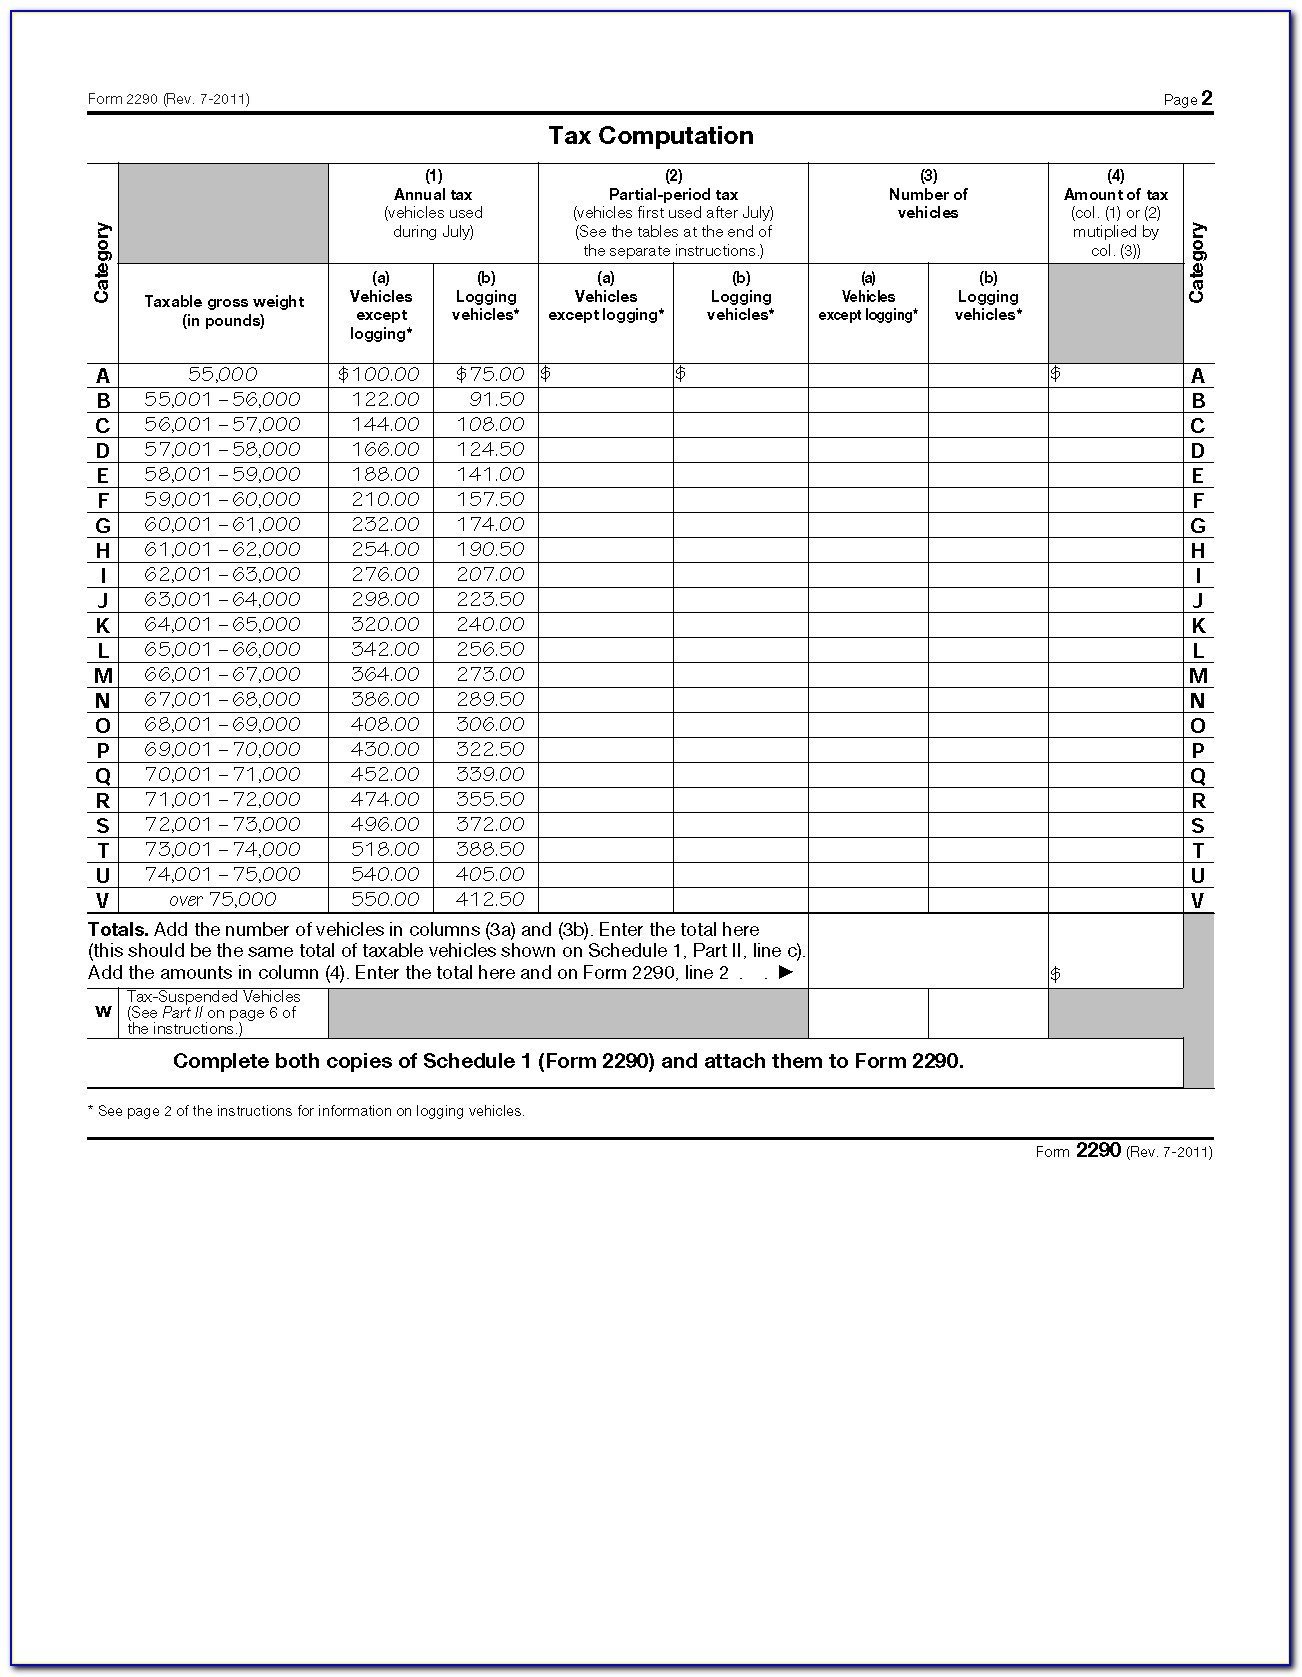 Heavy Road Tax Form 2290